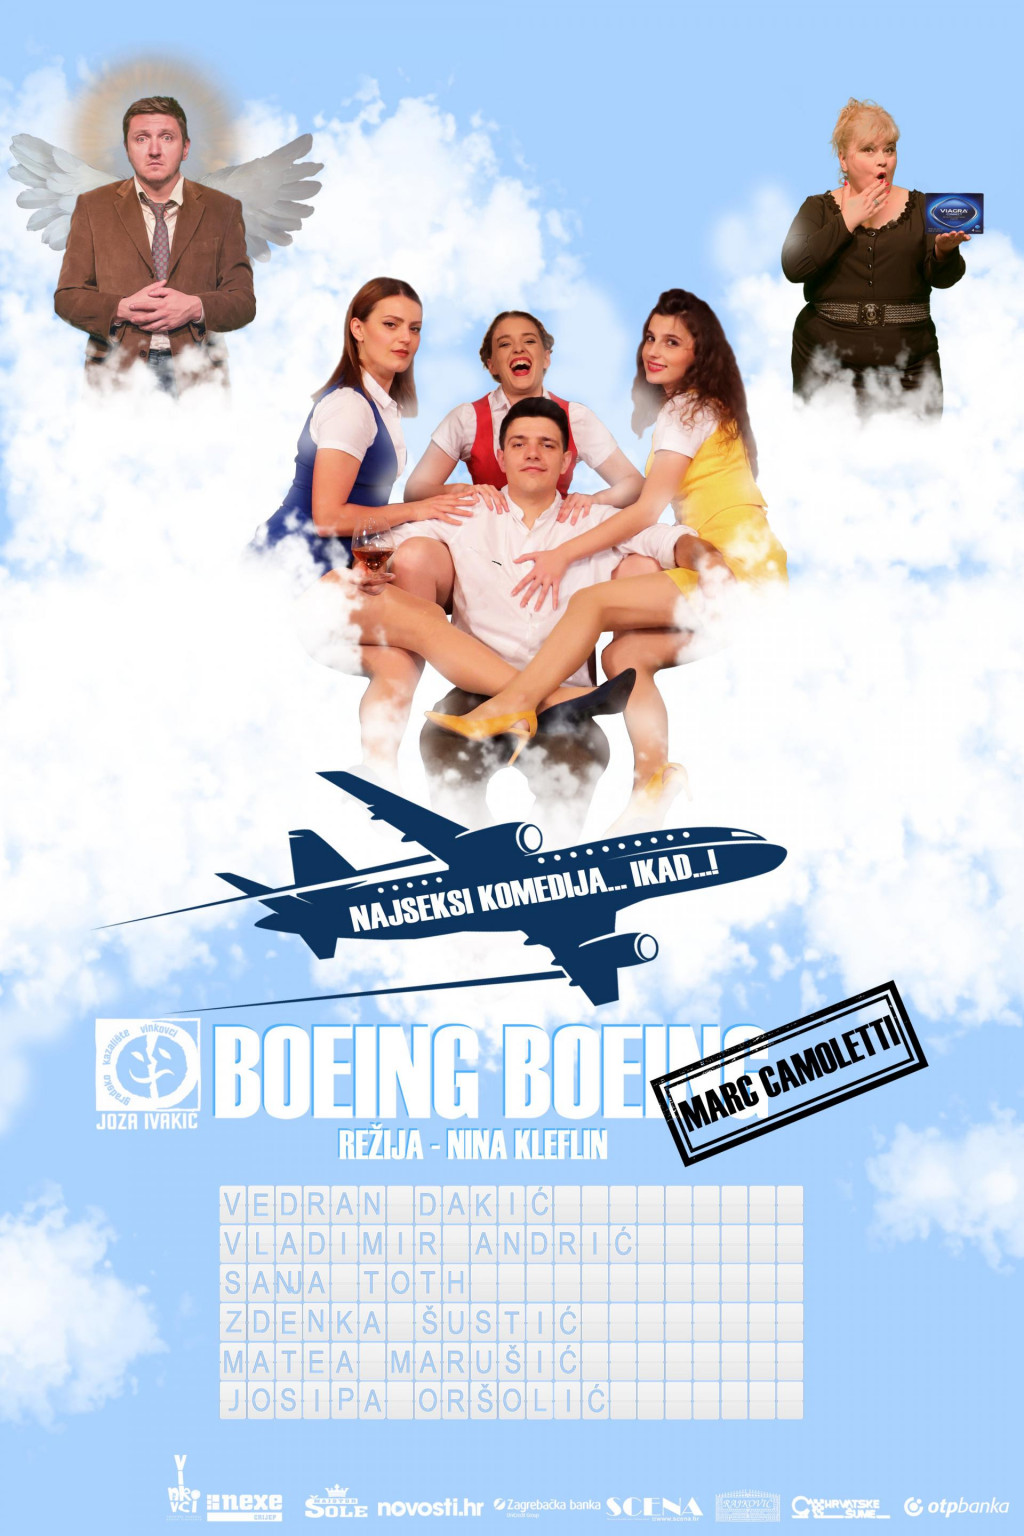 Plakat za predstavu ”Boeing, boeing”